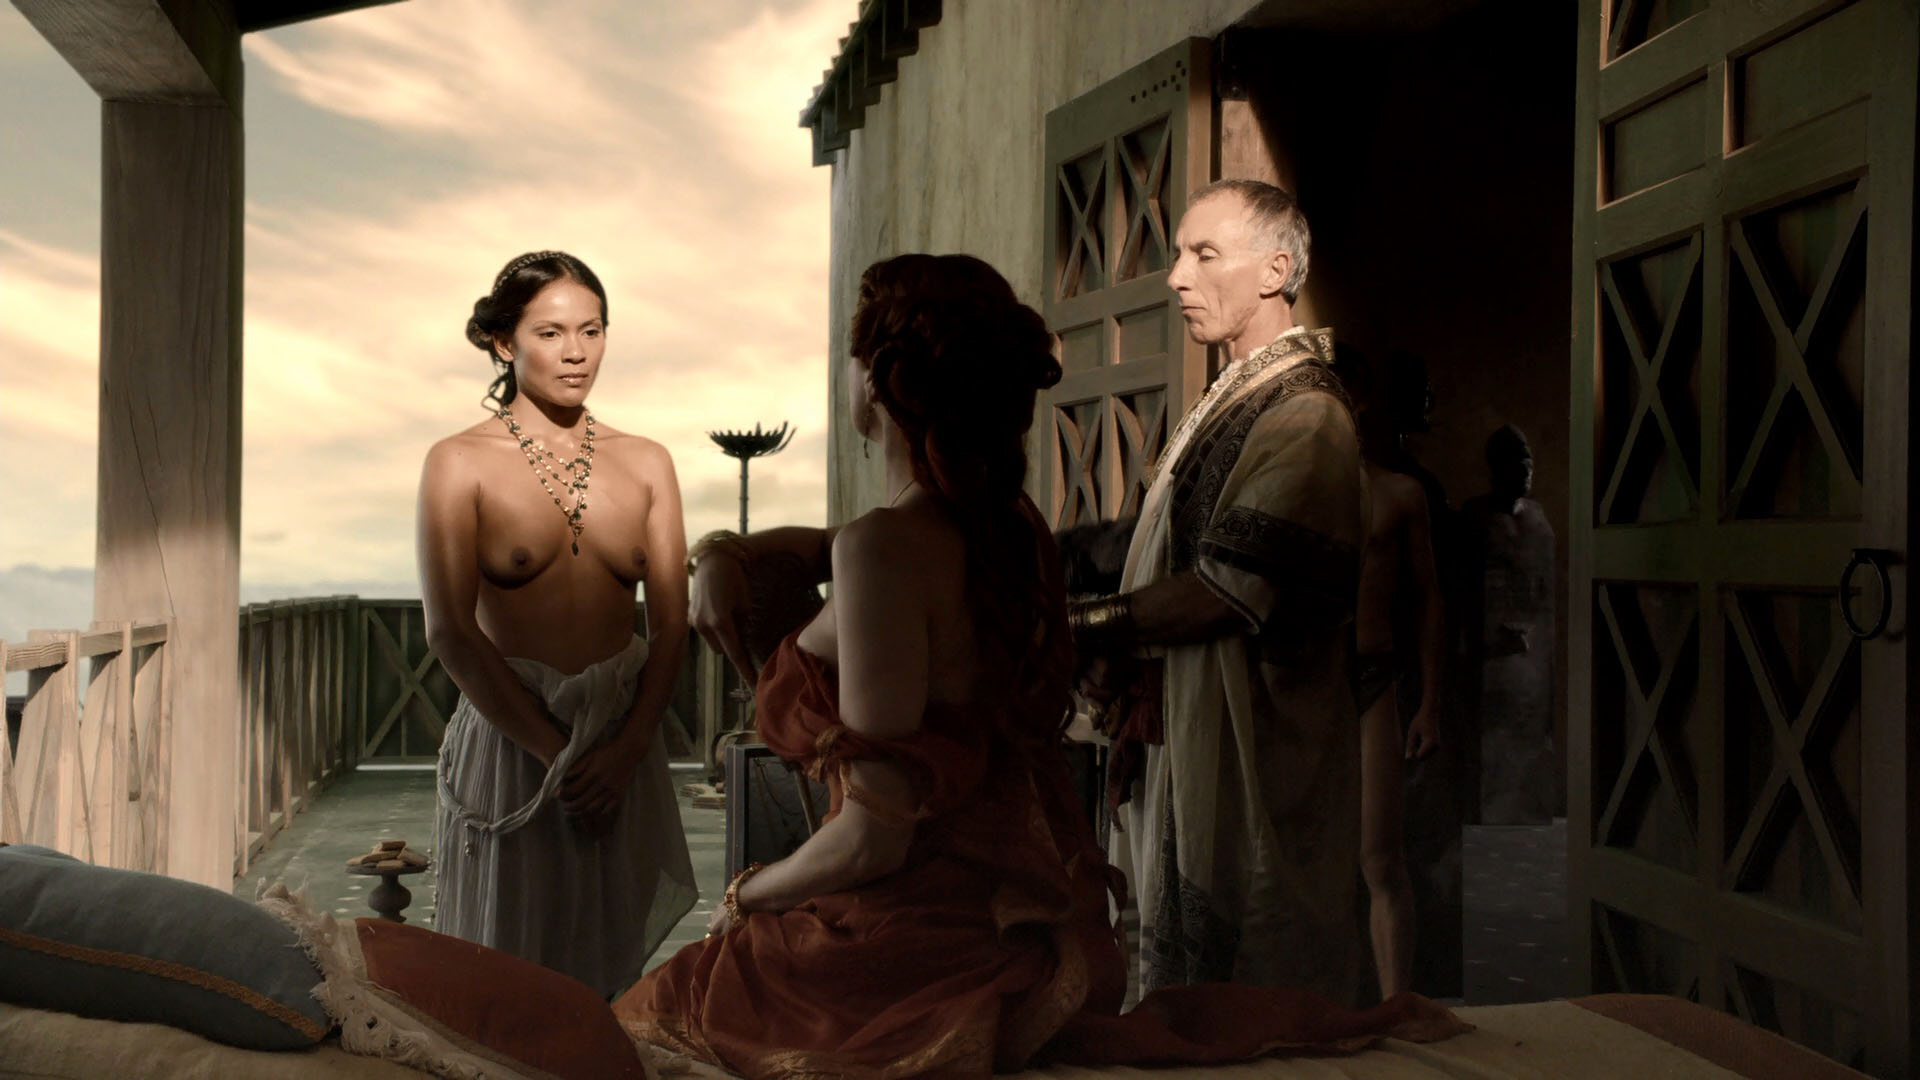 Lesley-Ann Brandt - Spartacus: Blood and Sand season 1 (2010) HD 1080p